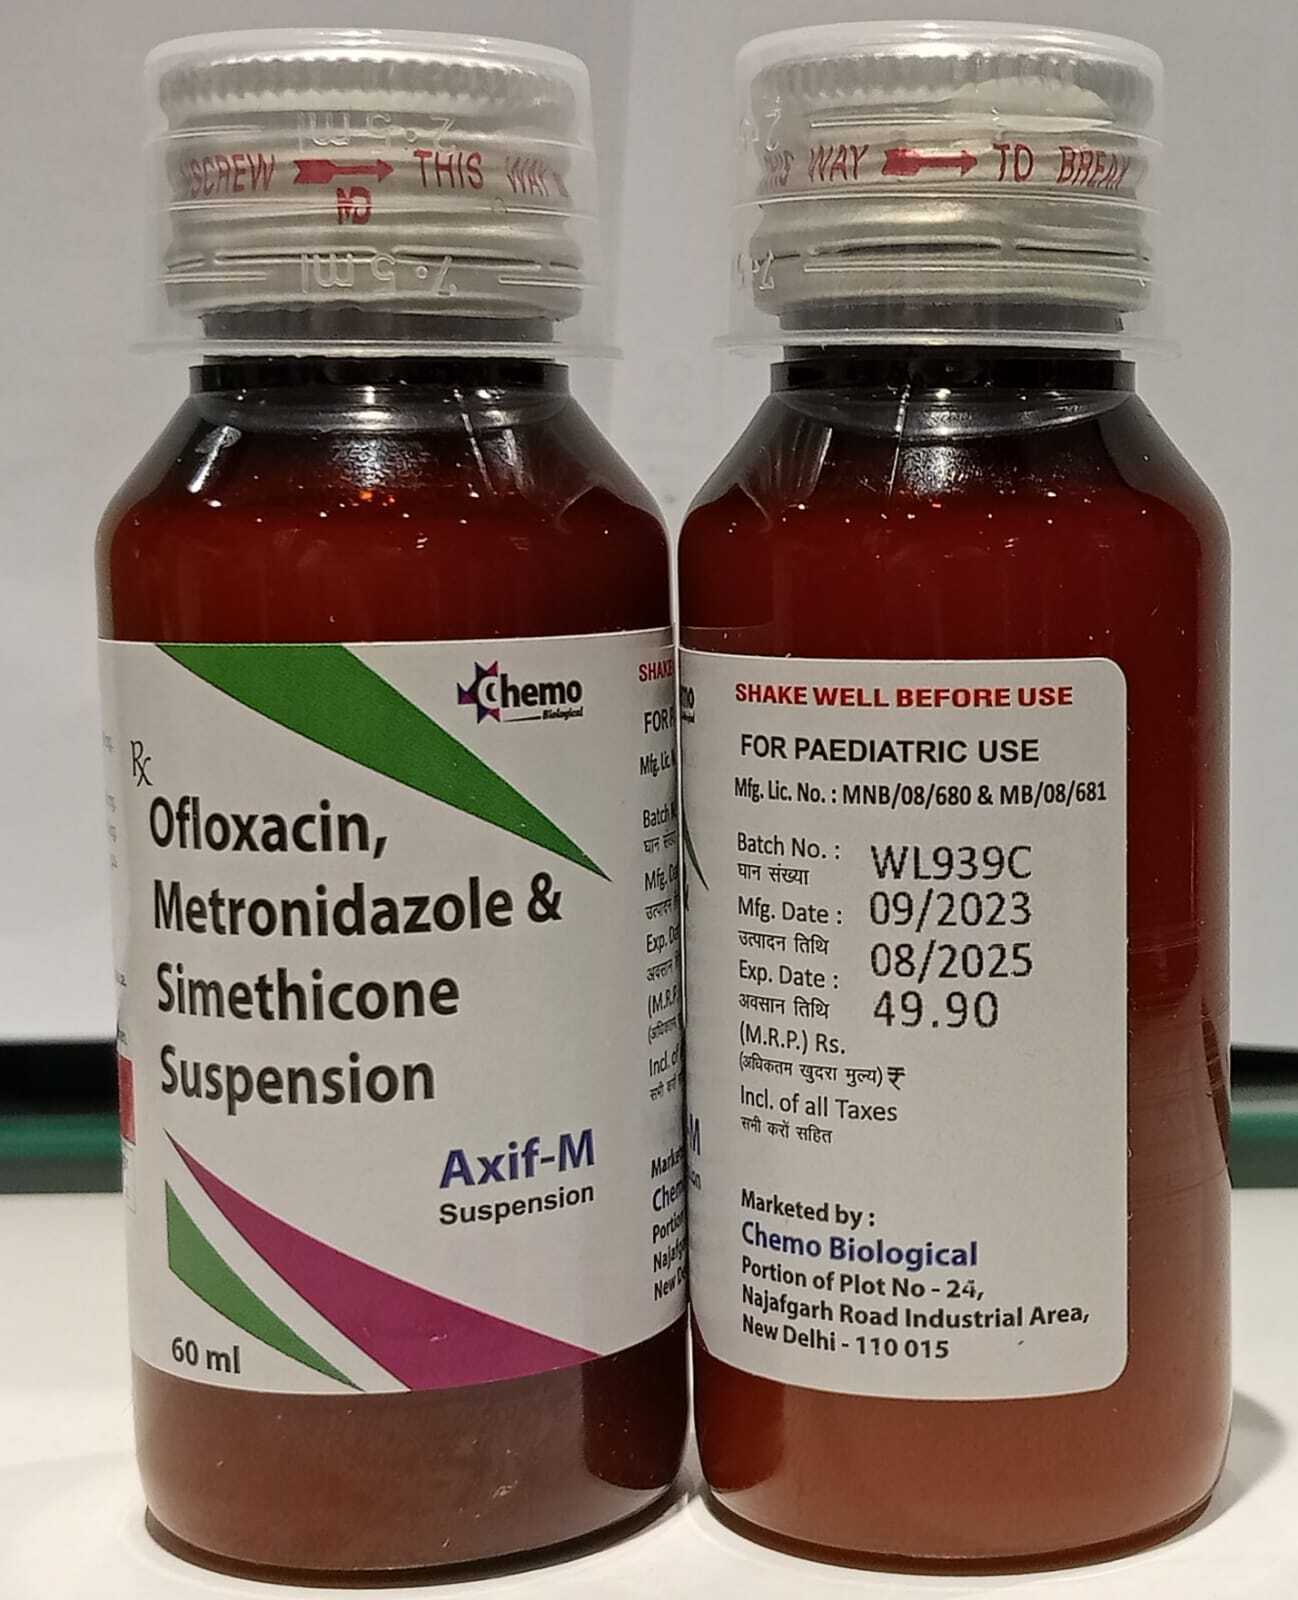 Ofloxacin 50mg + Metronidazole 120mg + Simethicone 10mg